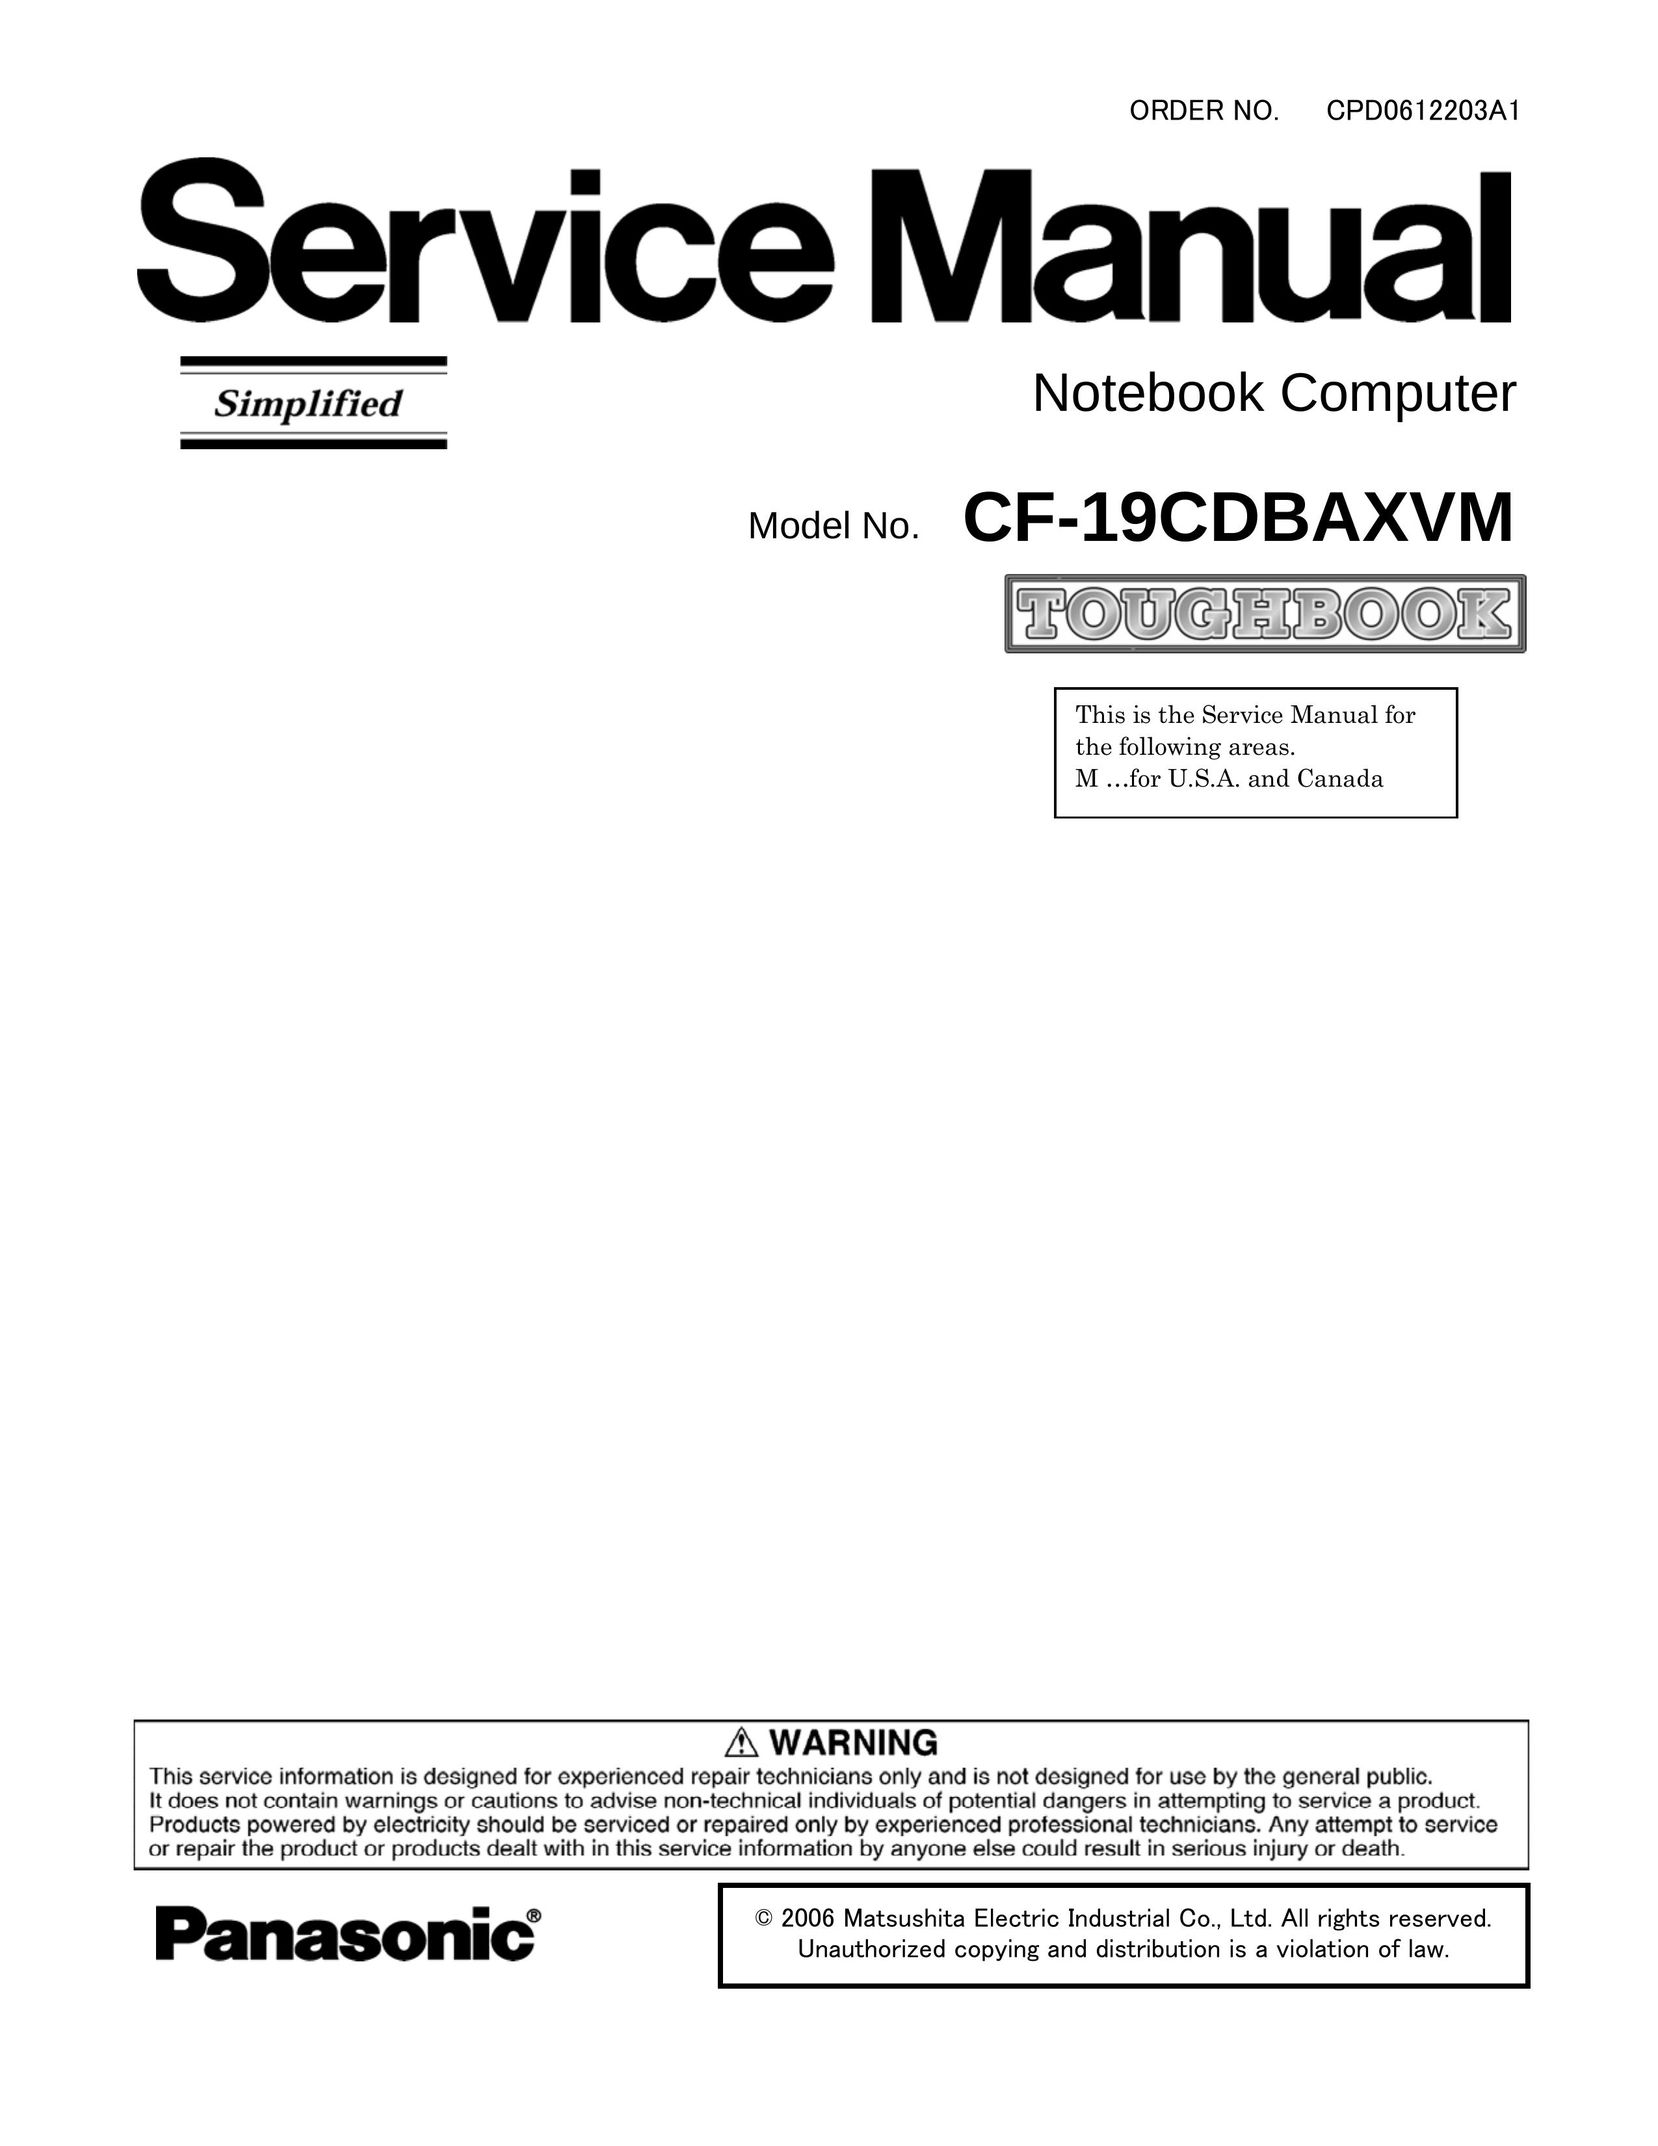 Panasonic CF-19CDBAXVM Laptop User Manual